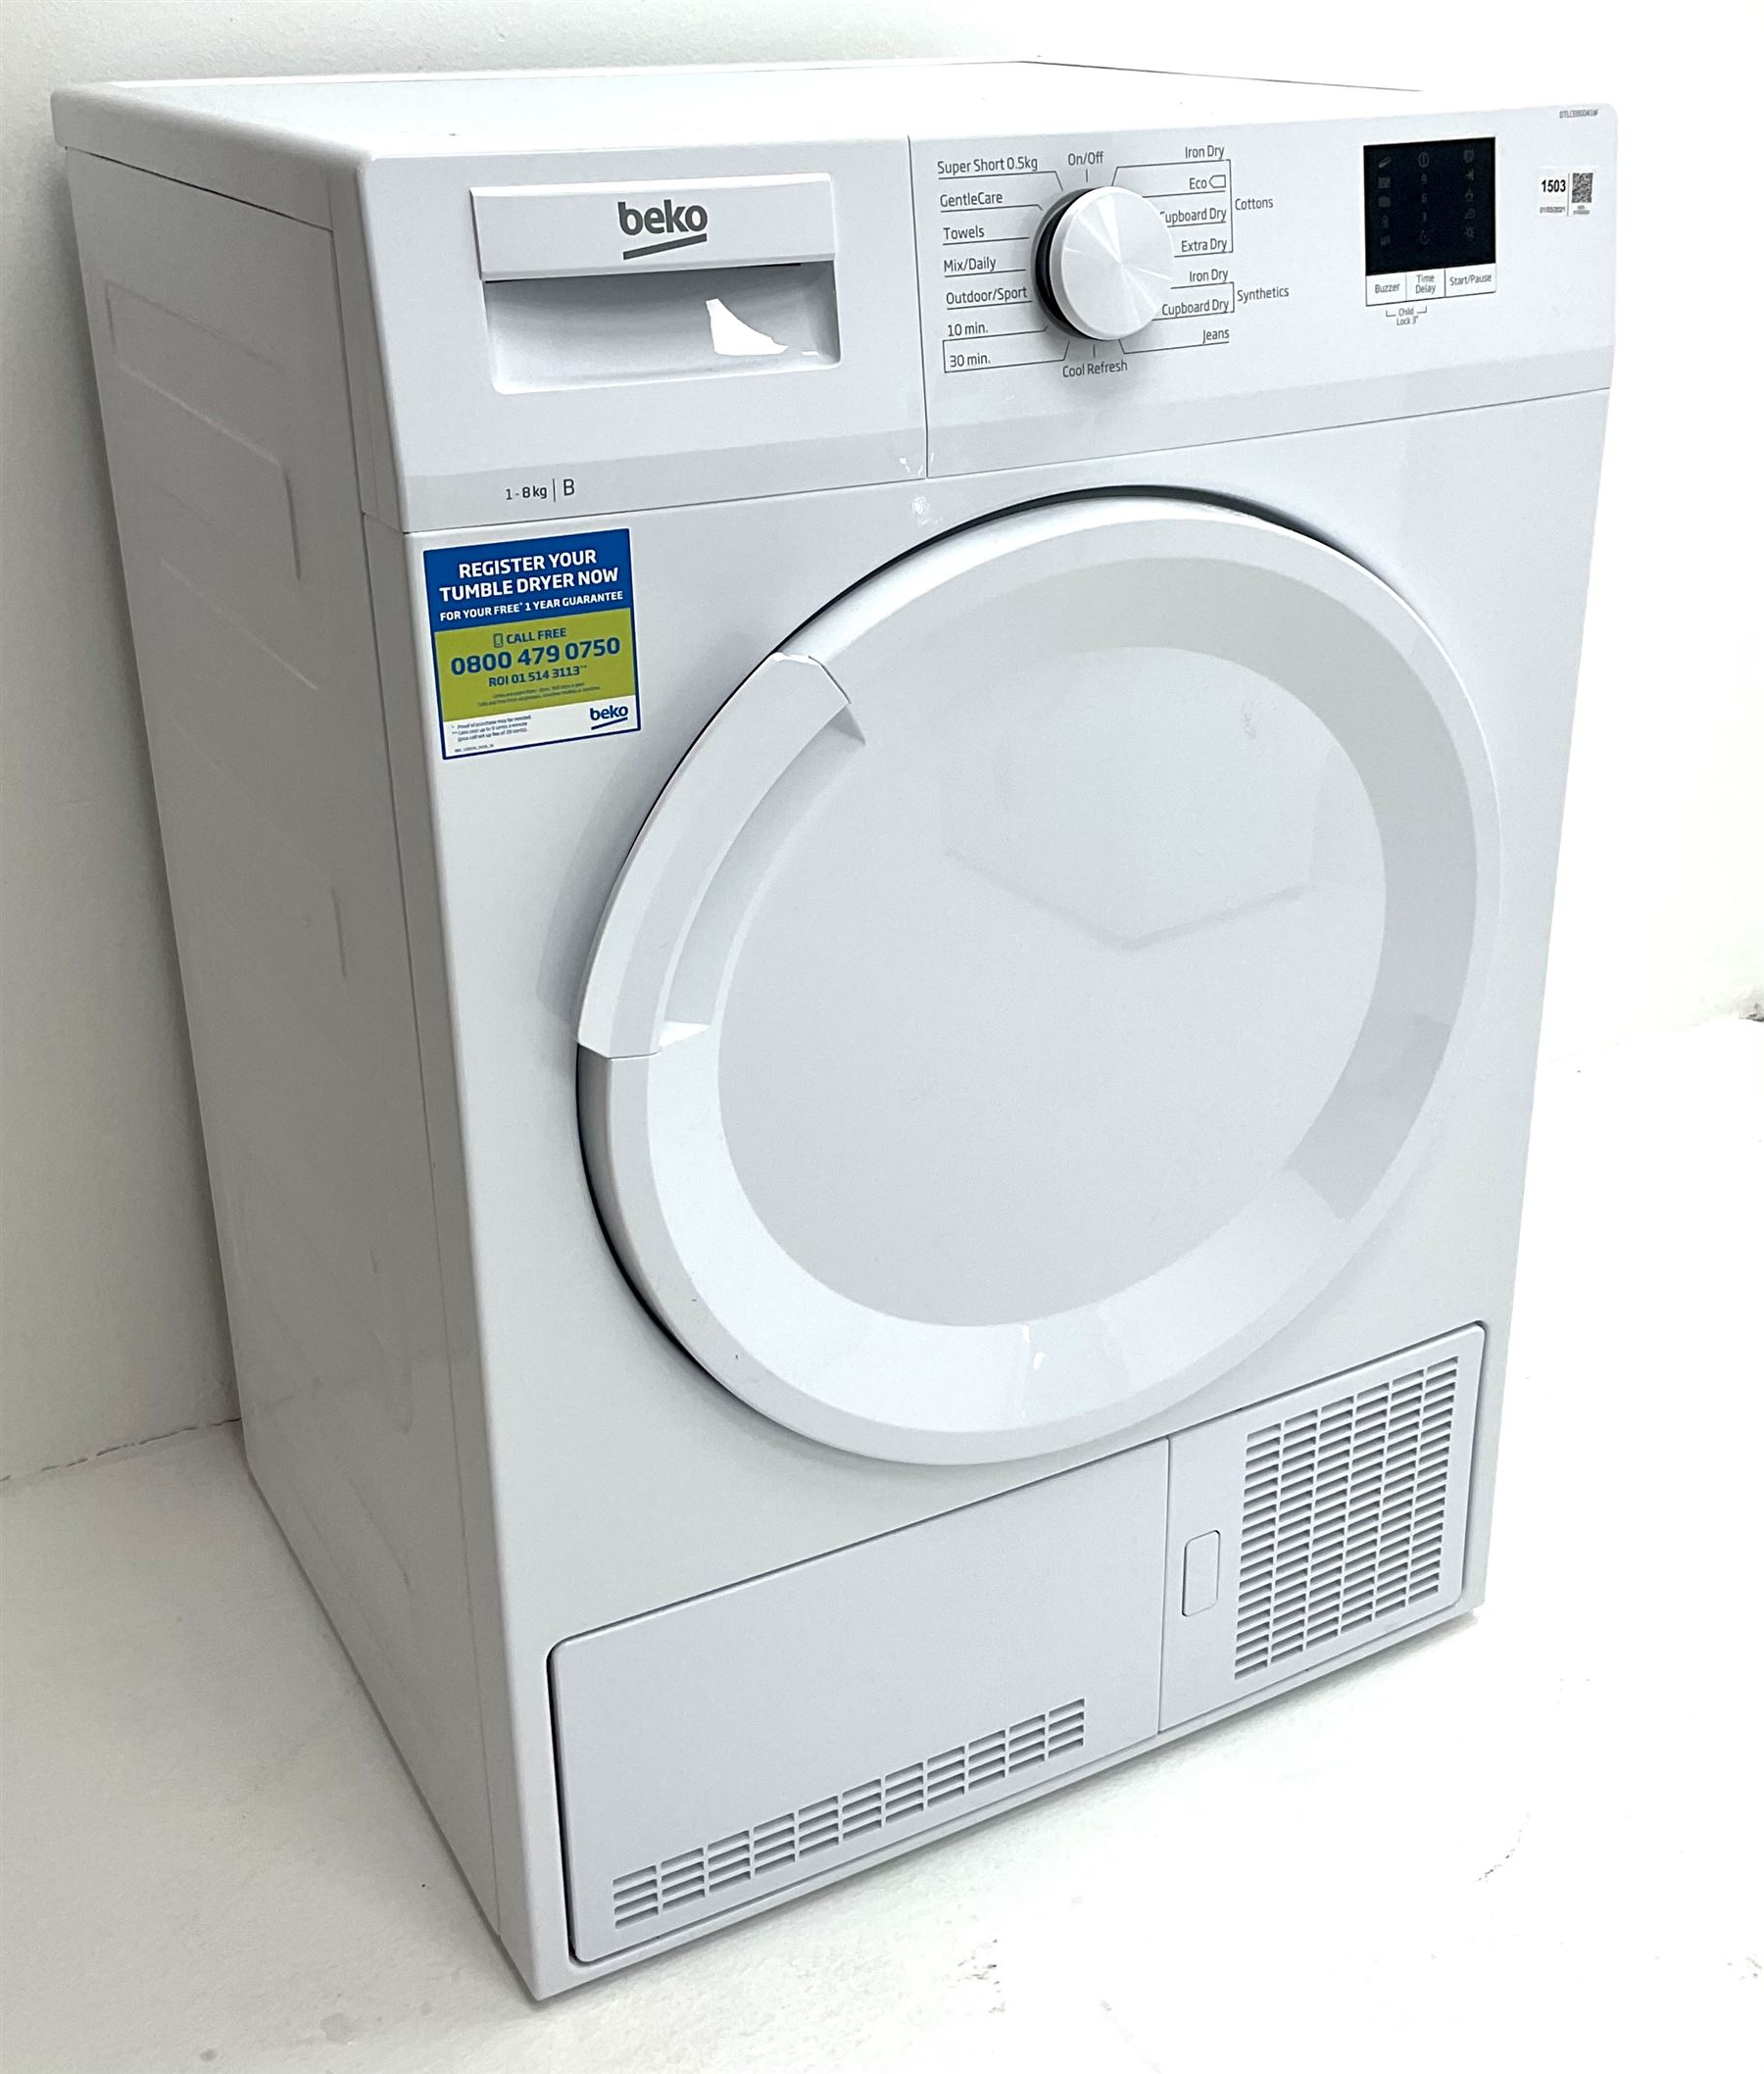 Beko DTLCE80041W tumble dryer